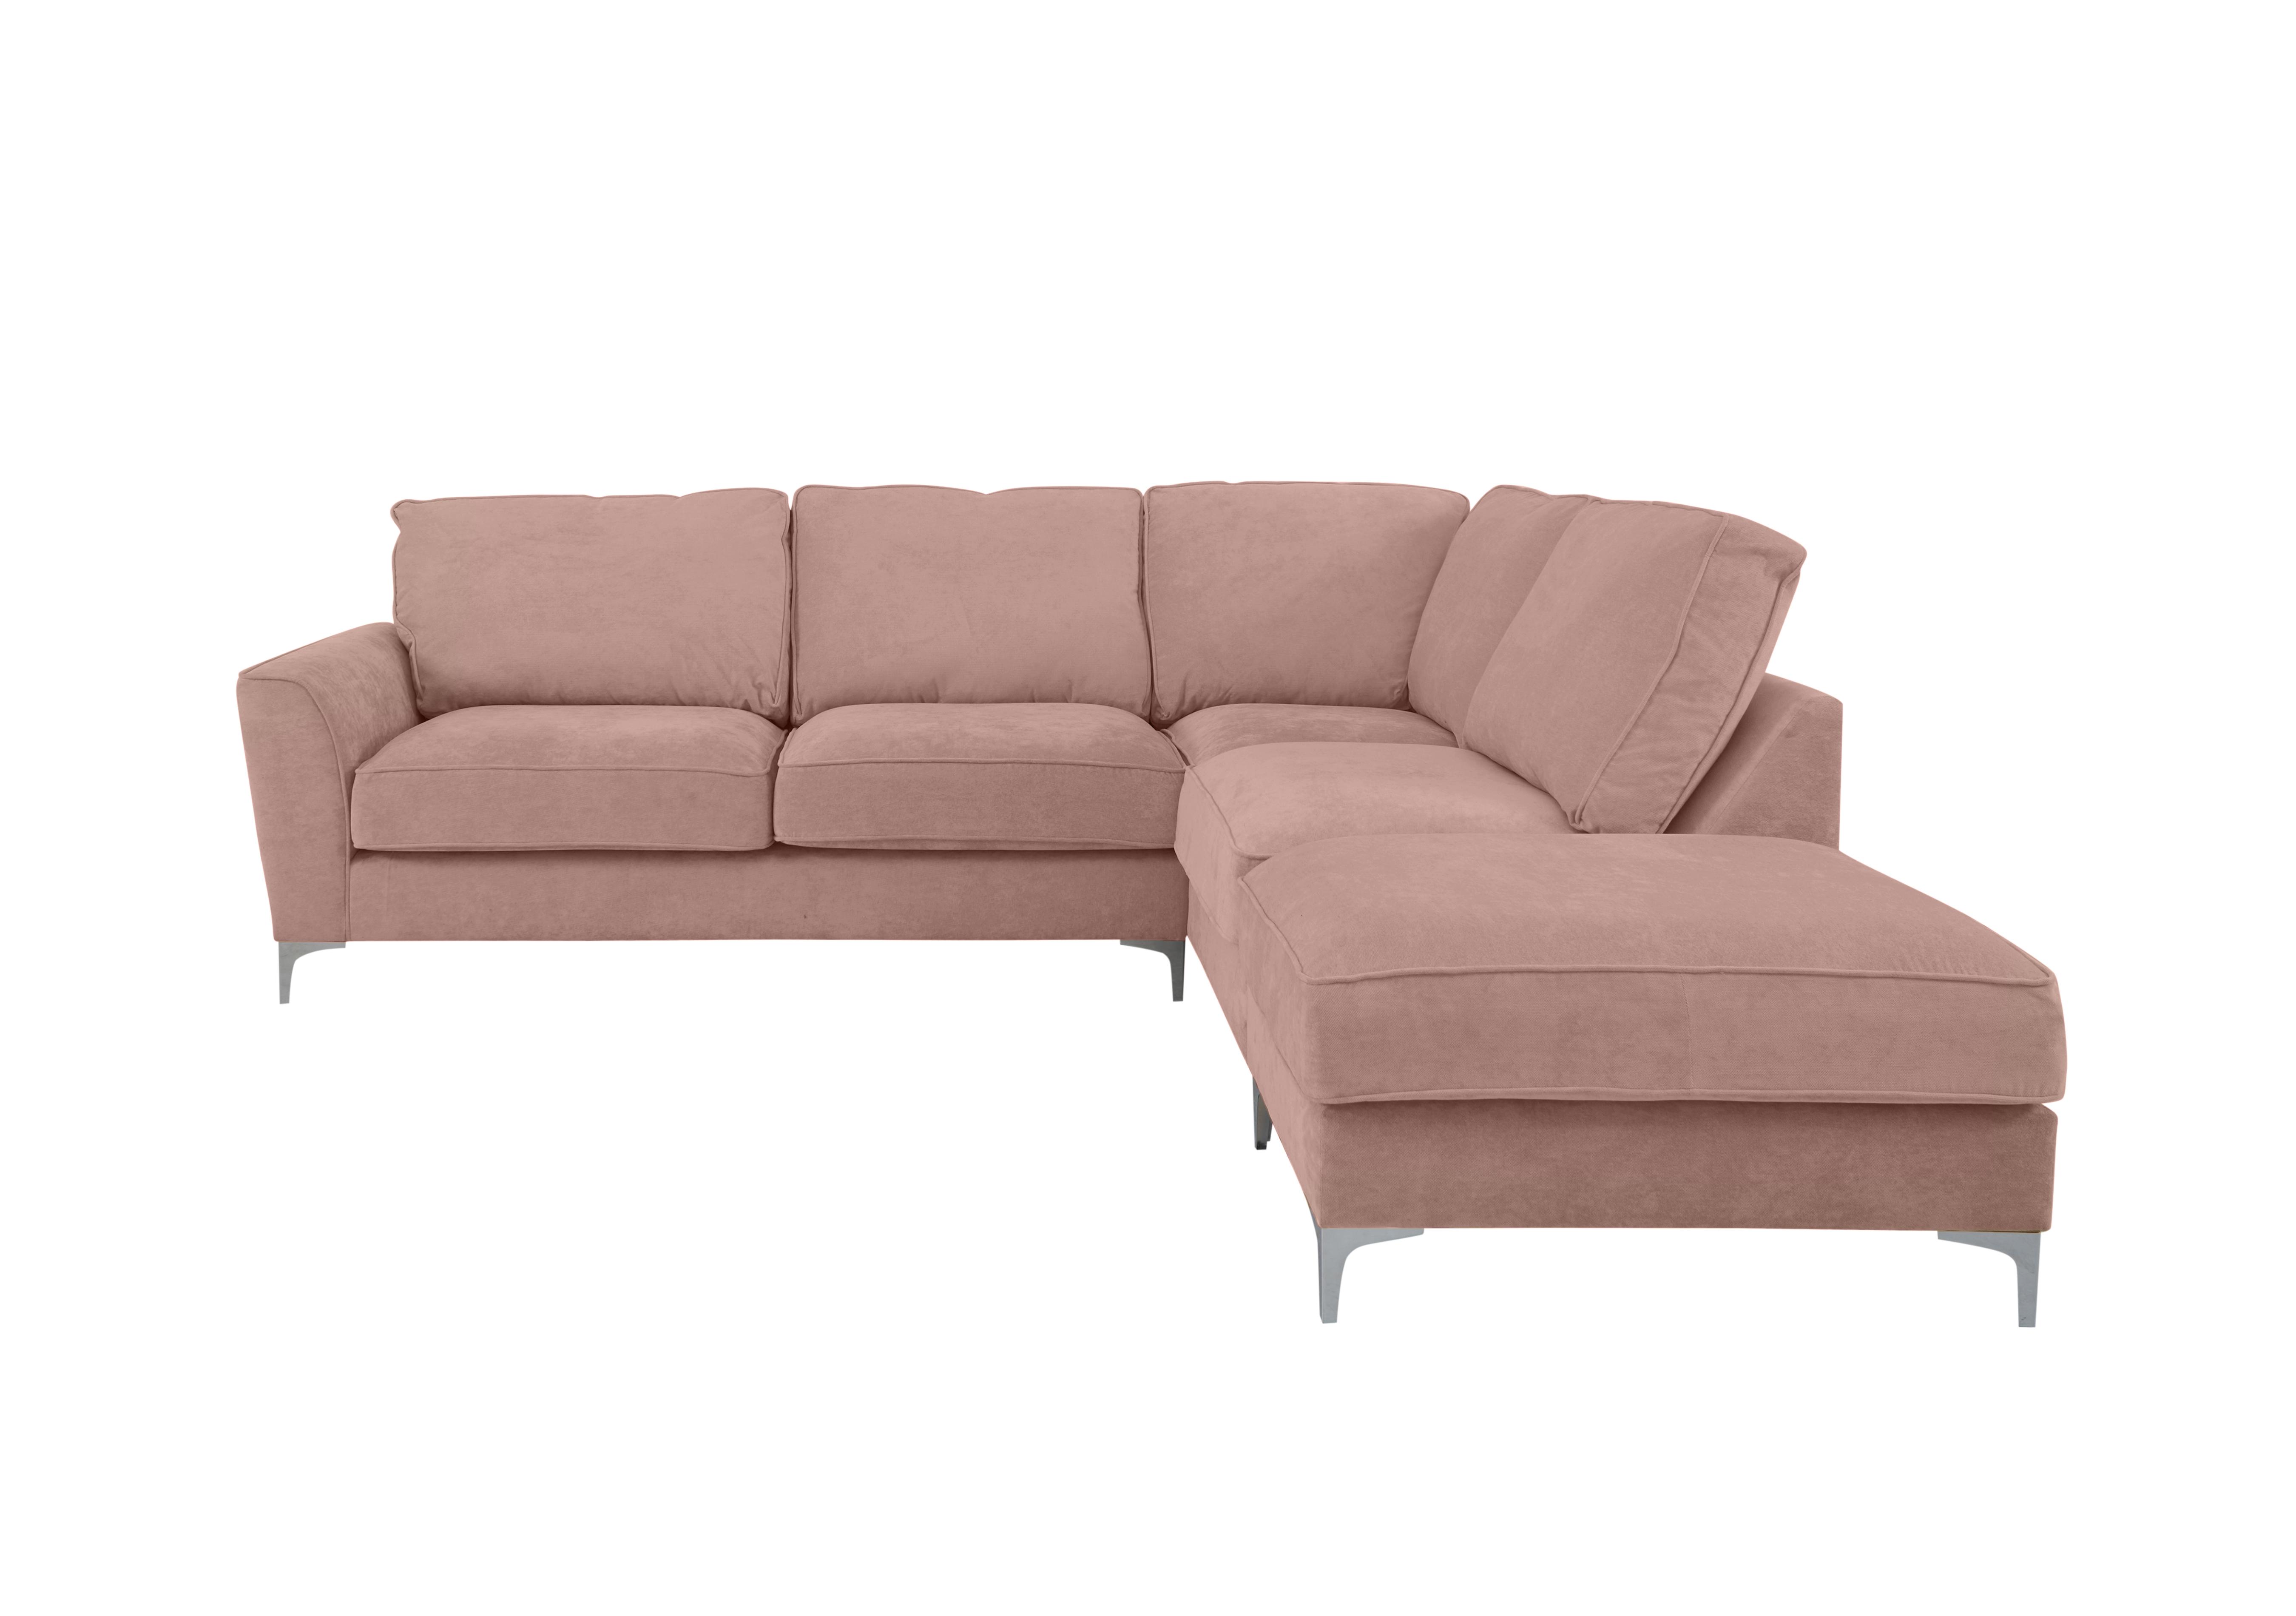 Legend Classic Back Fabric Corner Sofa in Kingston Blush on Furniture Village